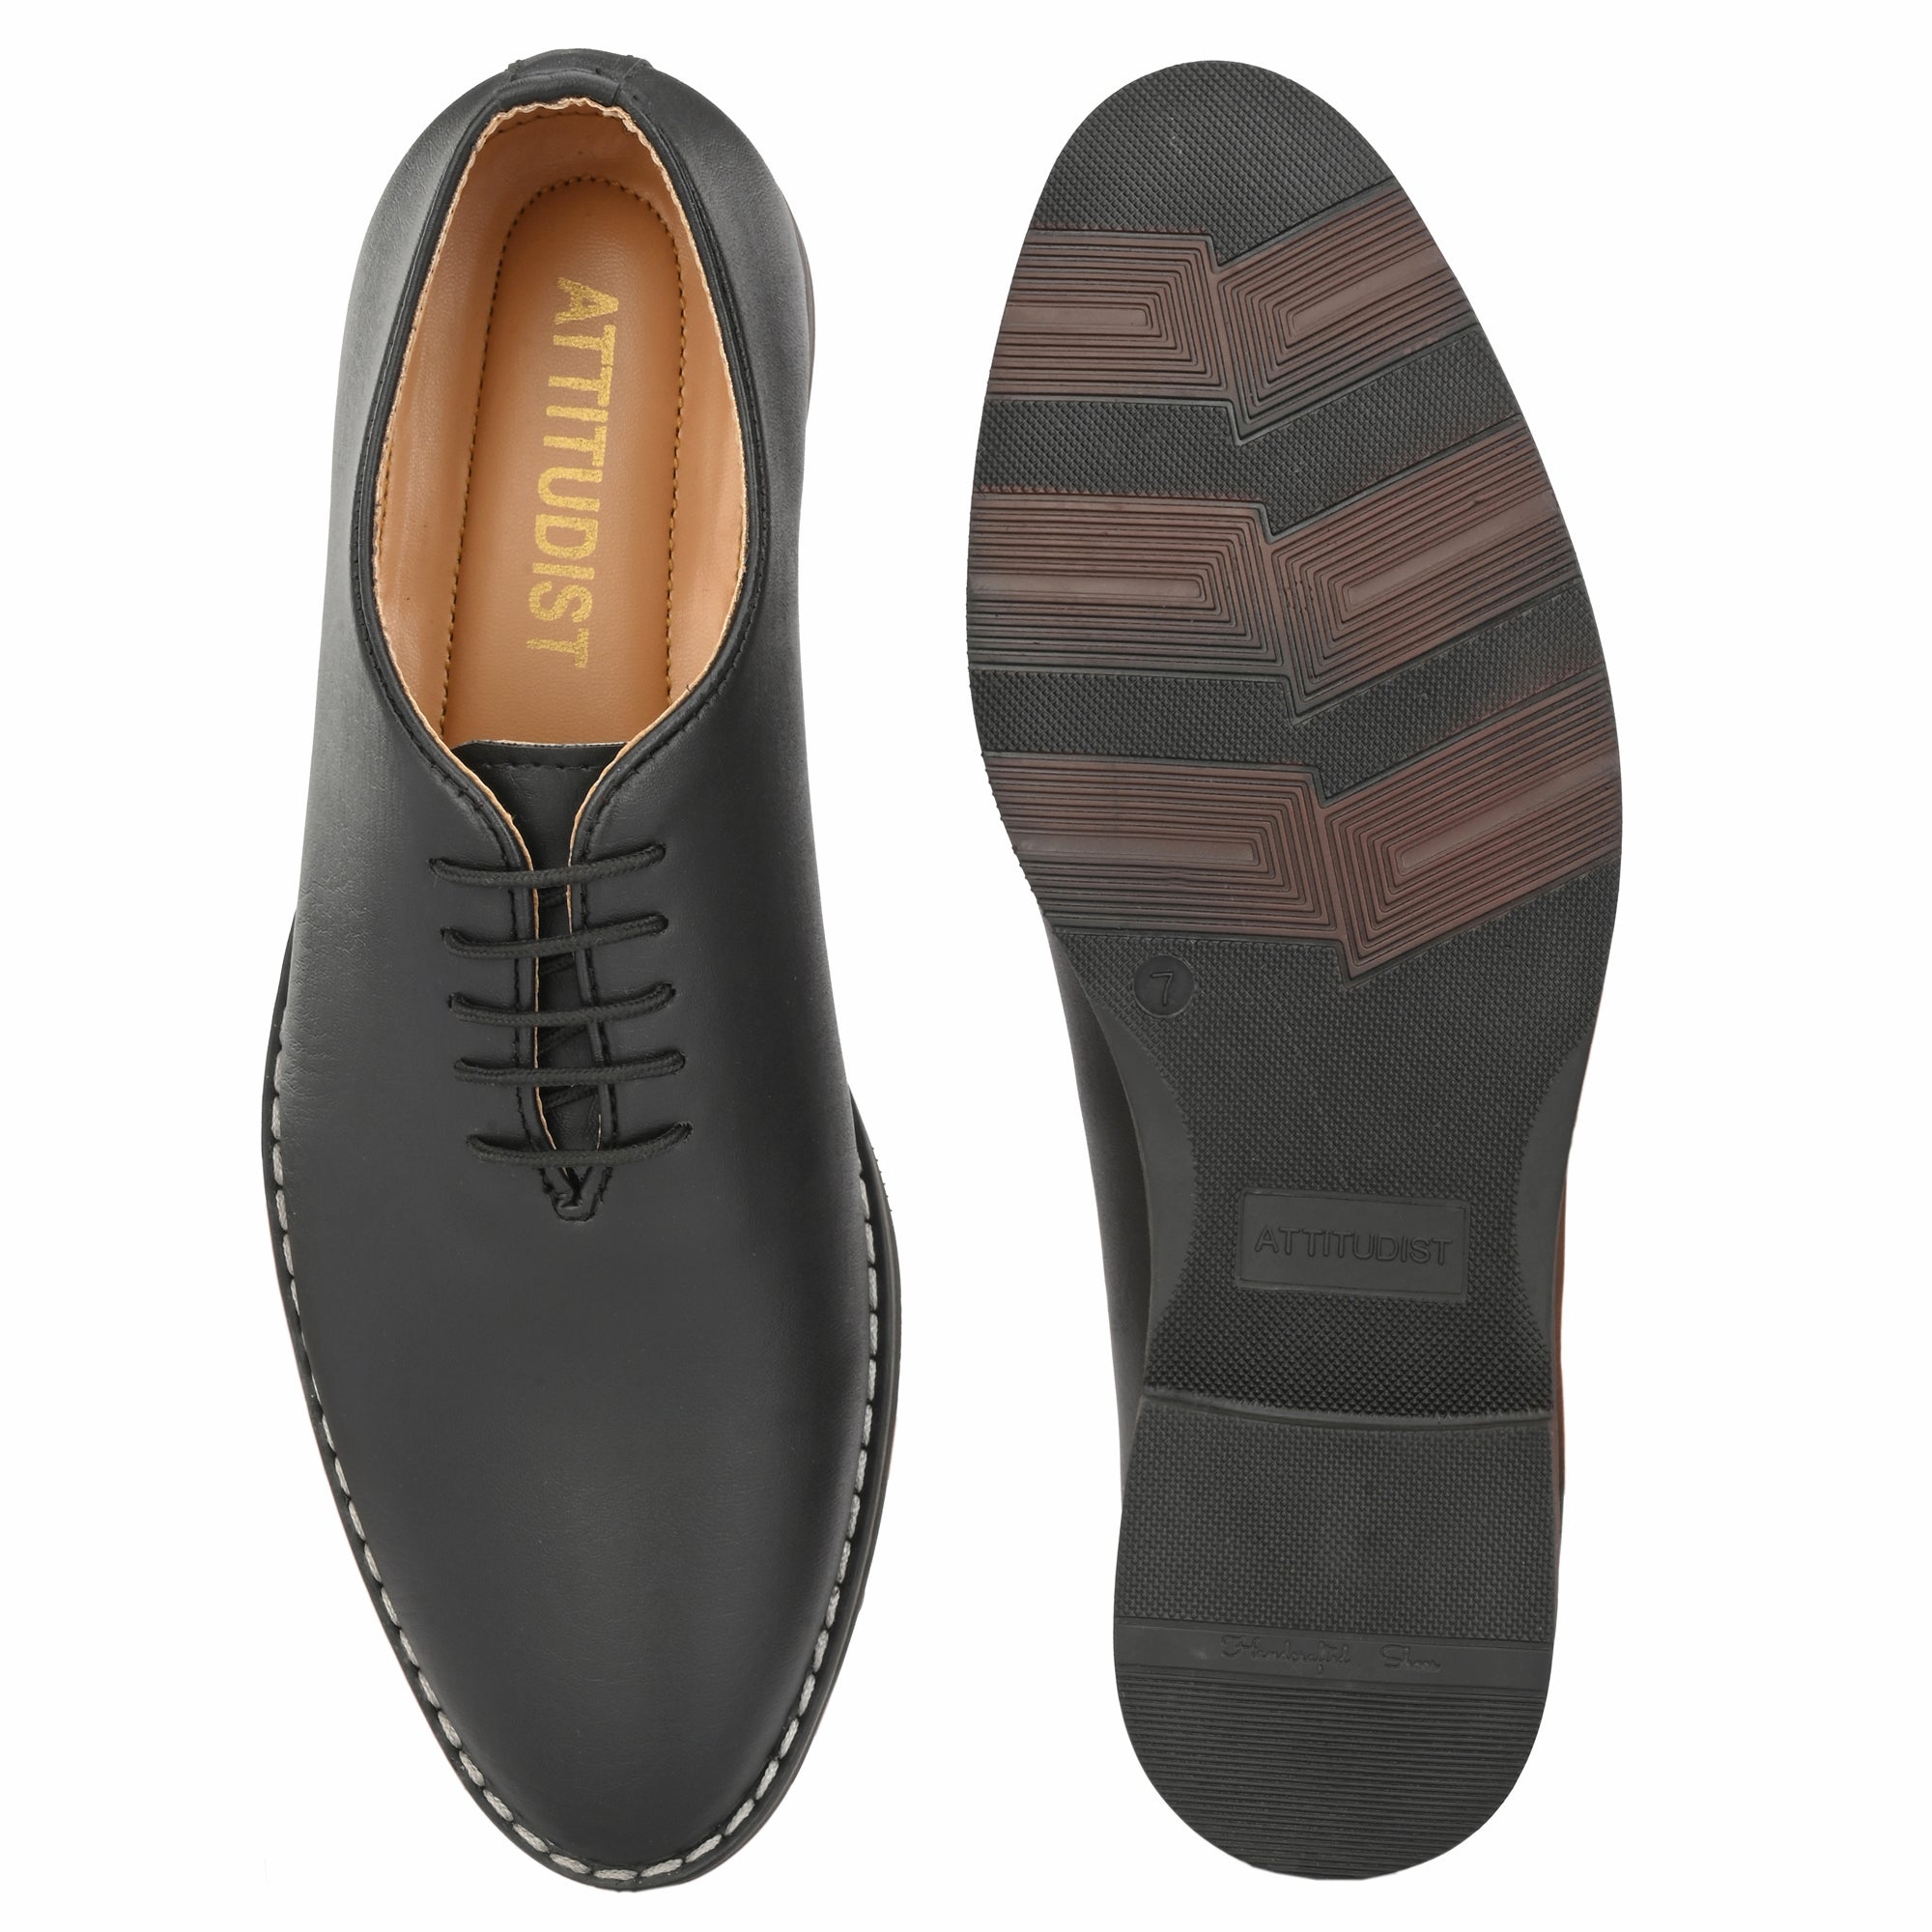 stylish-men-shoes-4007black